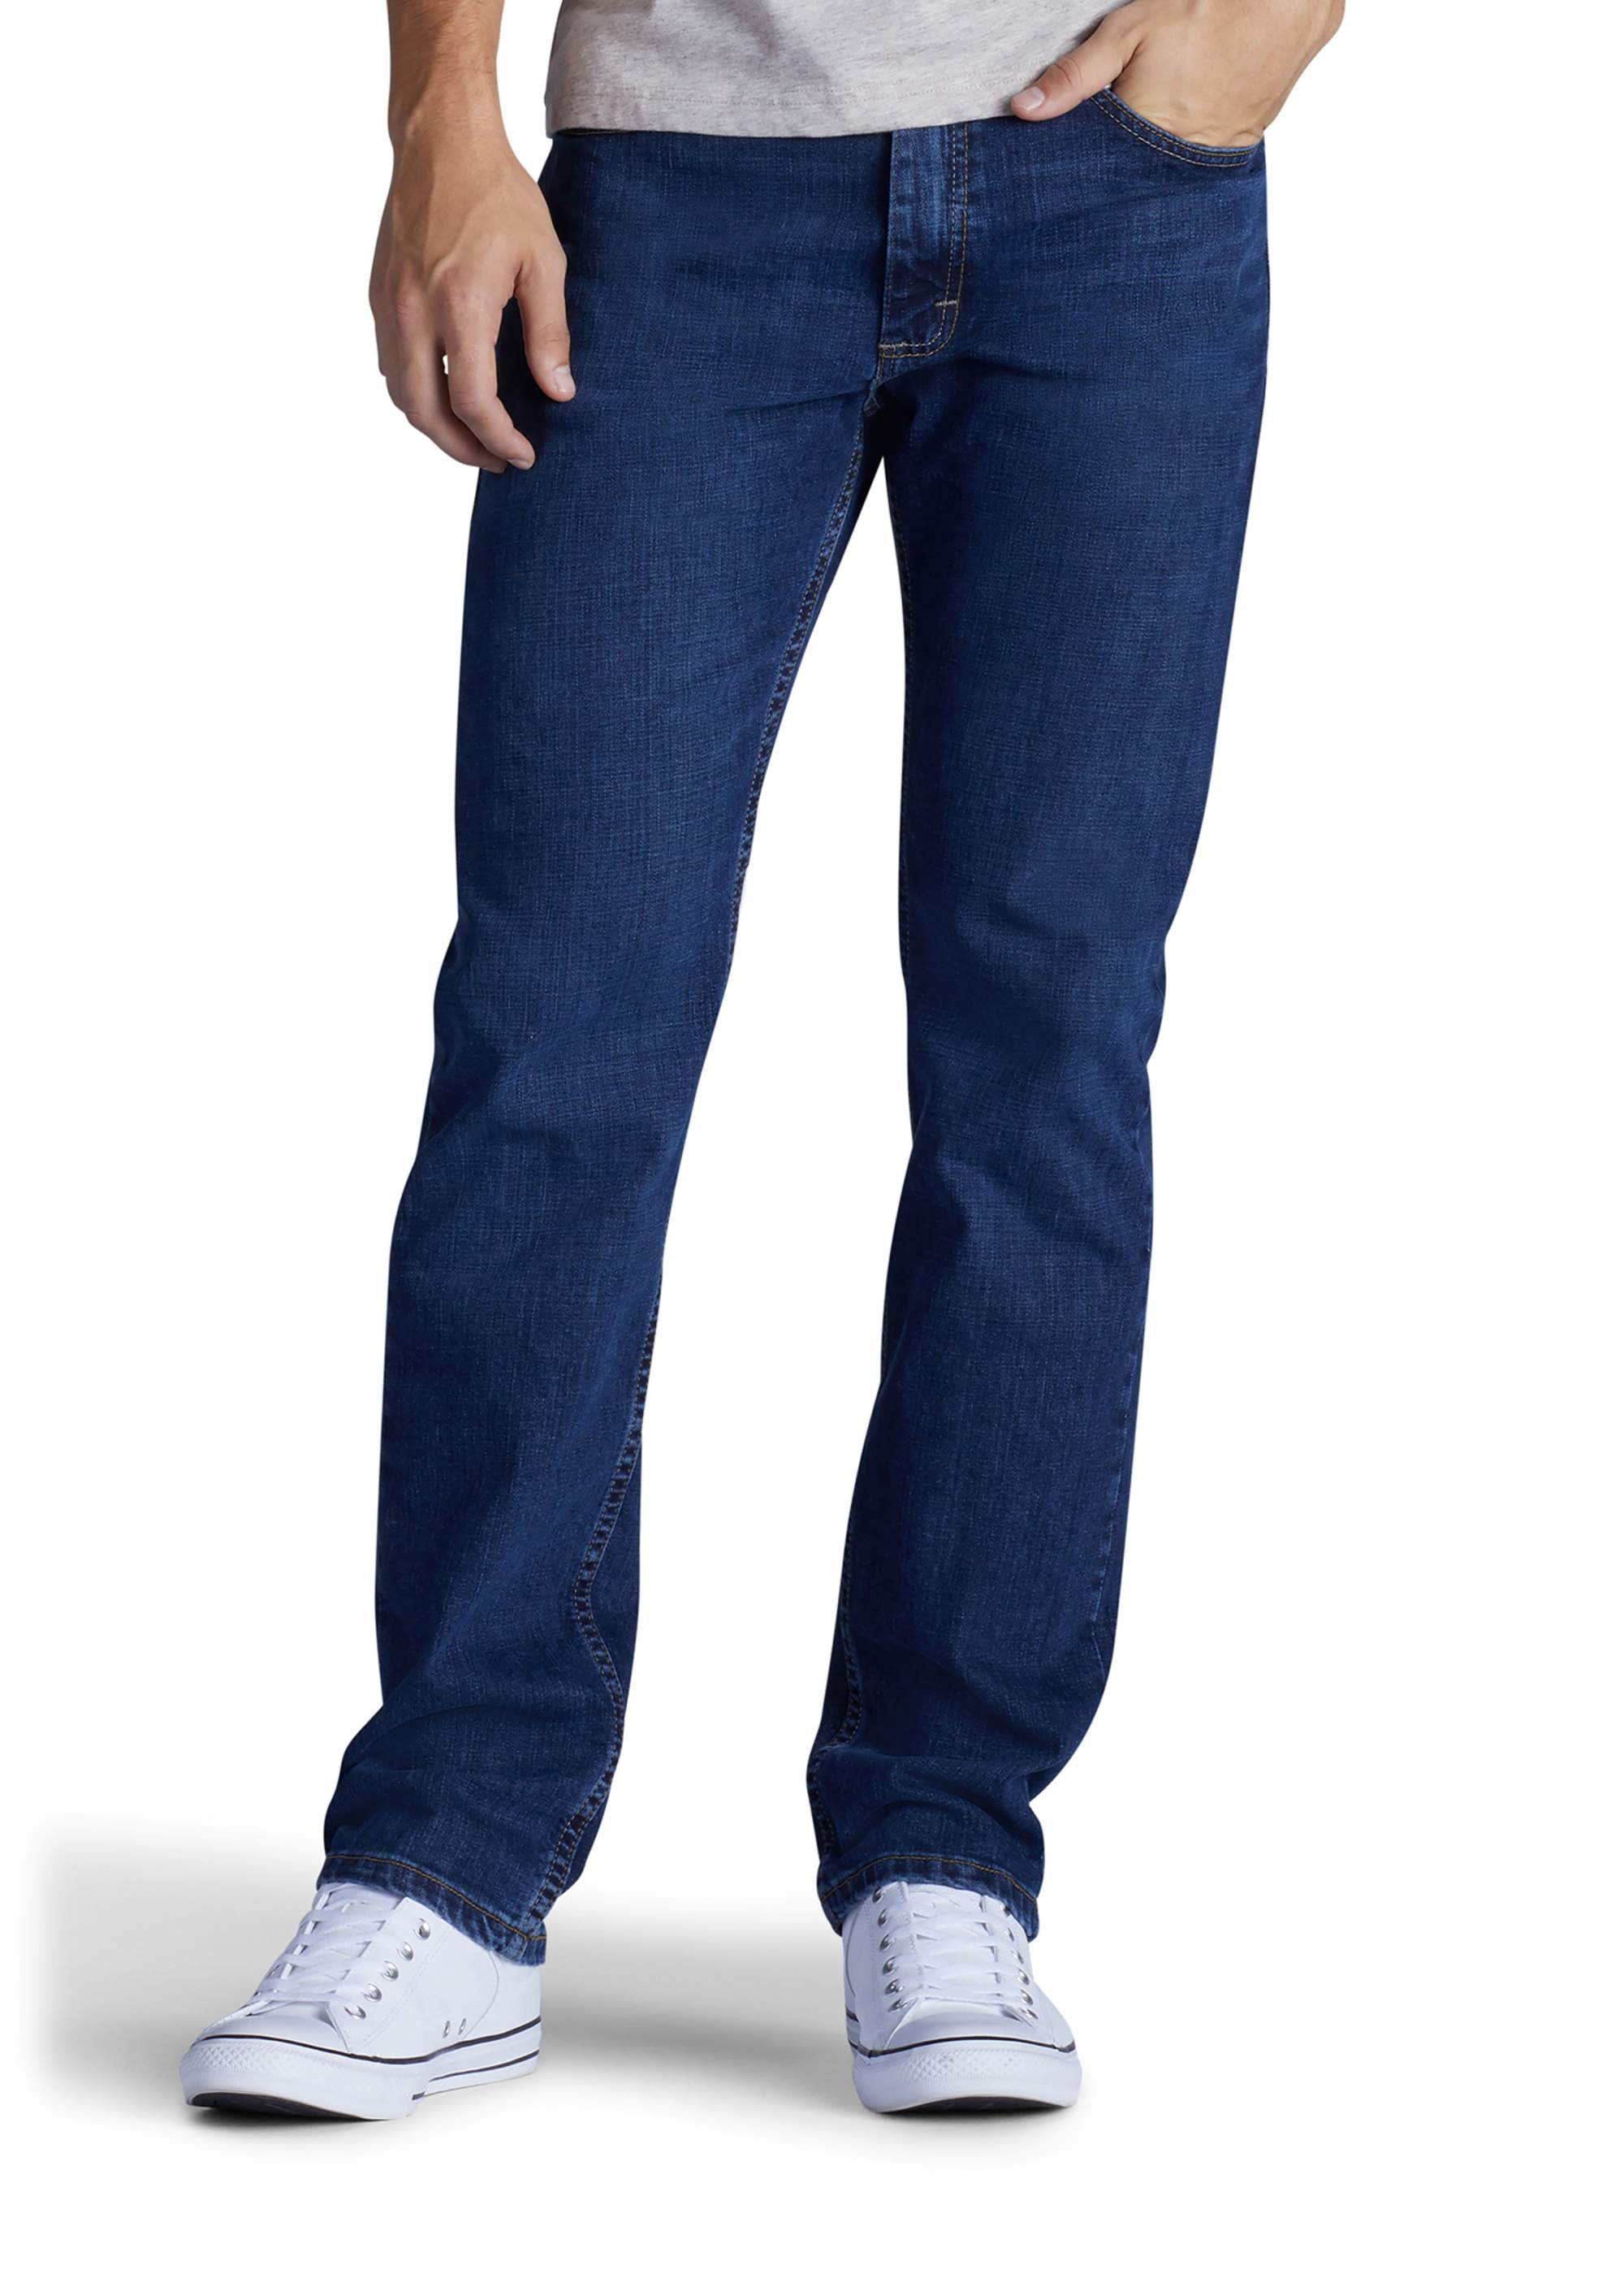 Lee Men's Premium Select Classic Fit Jeans - Walmart.com